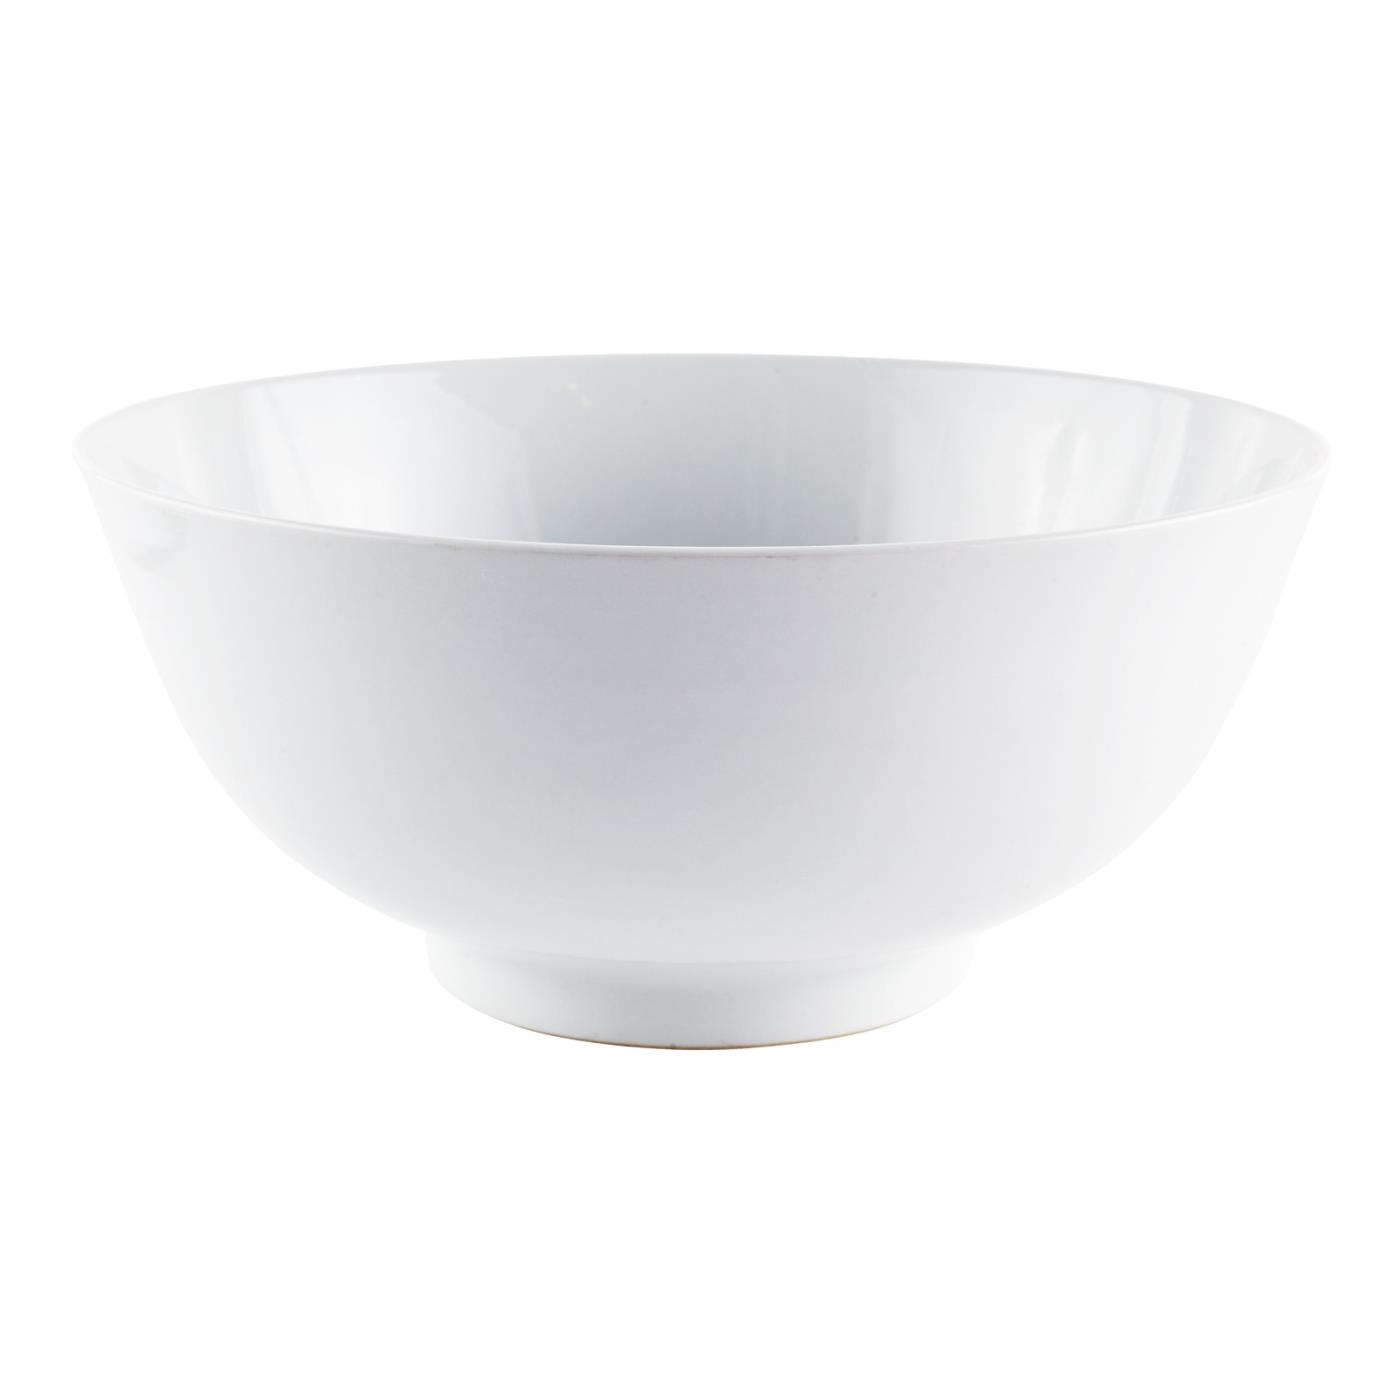 White Ceramic Round Bowl - 14"